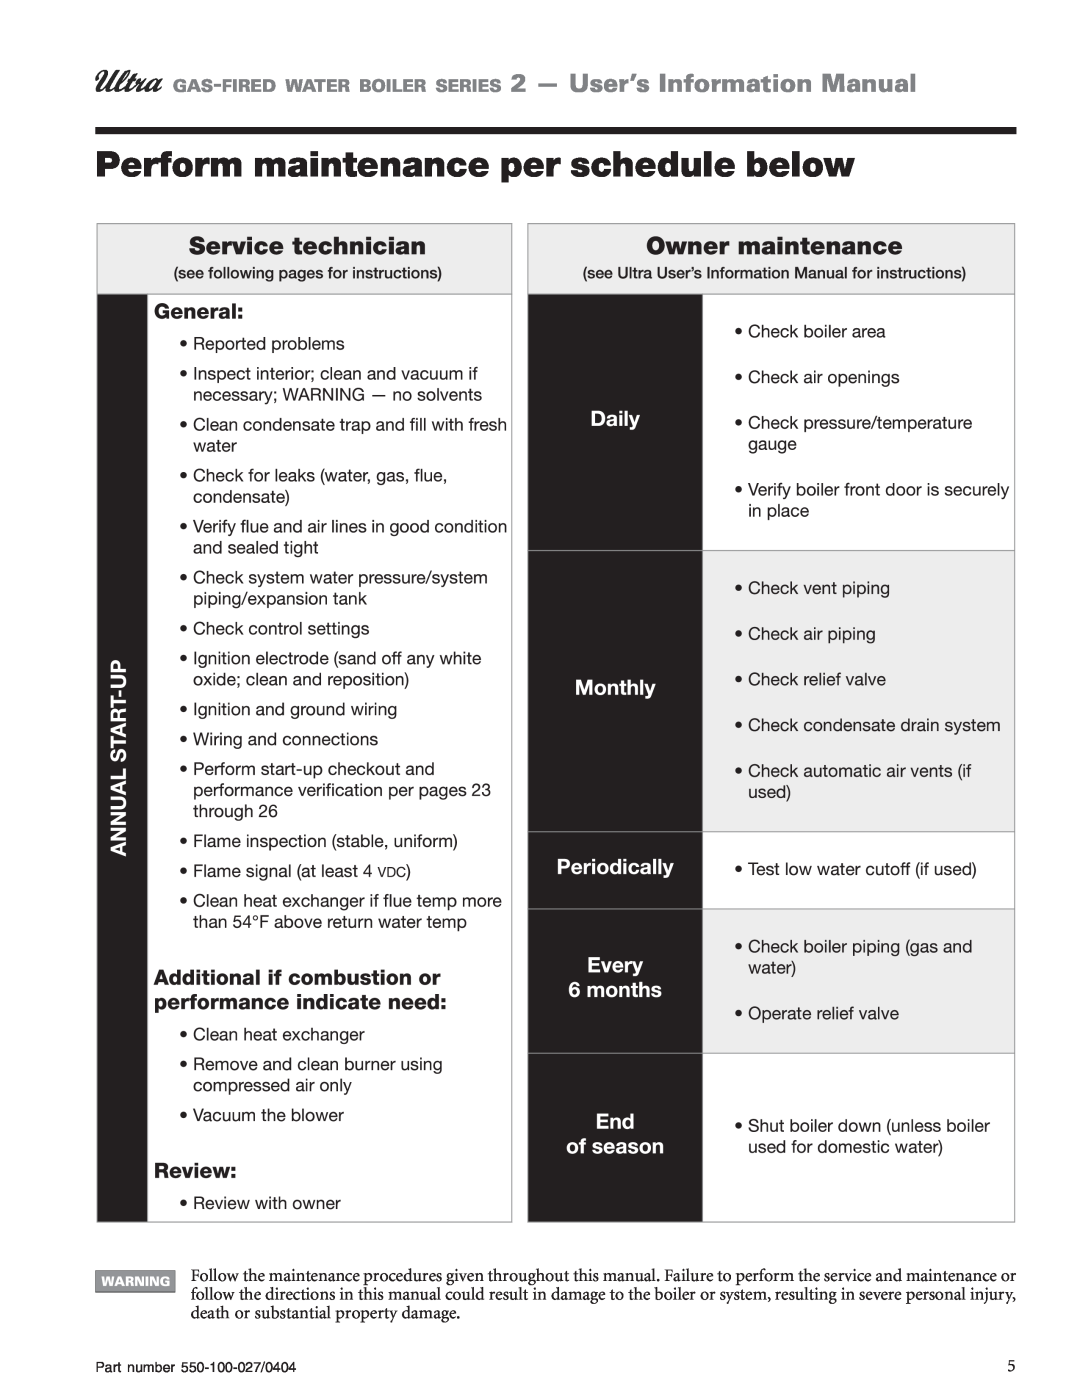 Weil-McLain Series 2 manual Perform maintenance per schedule below, Part number 550-100-027/0404 